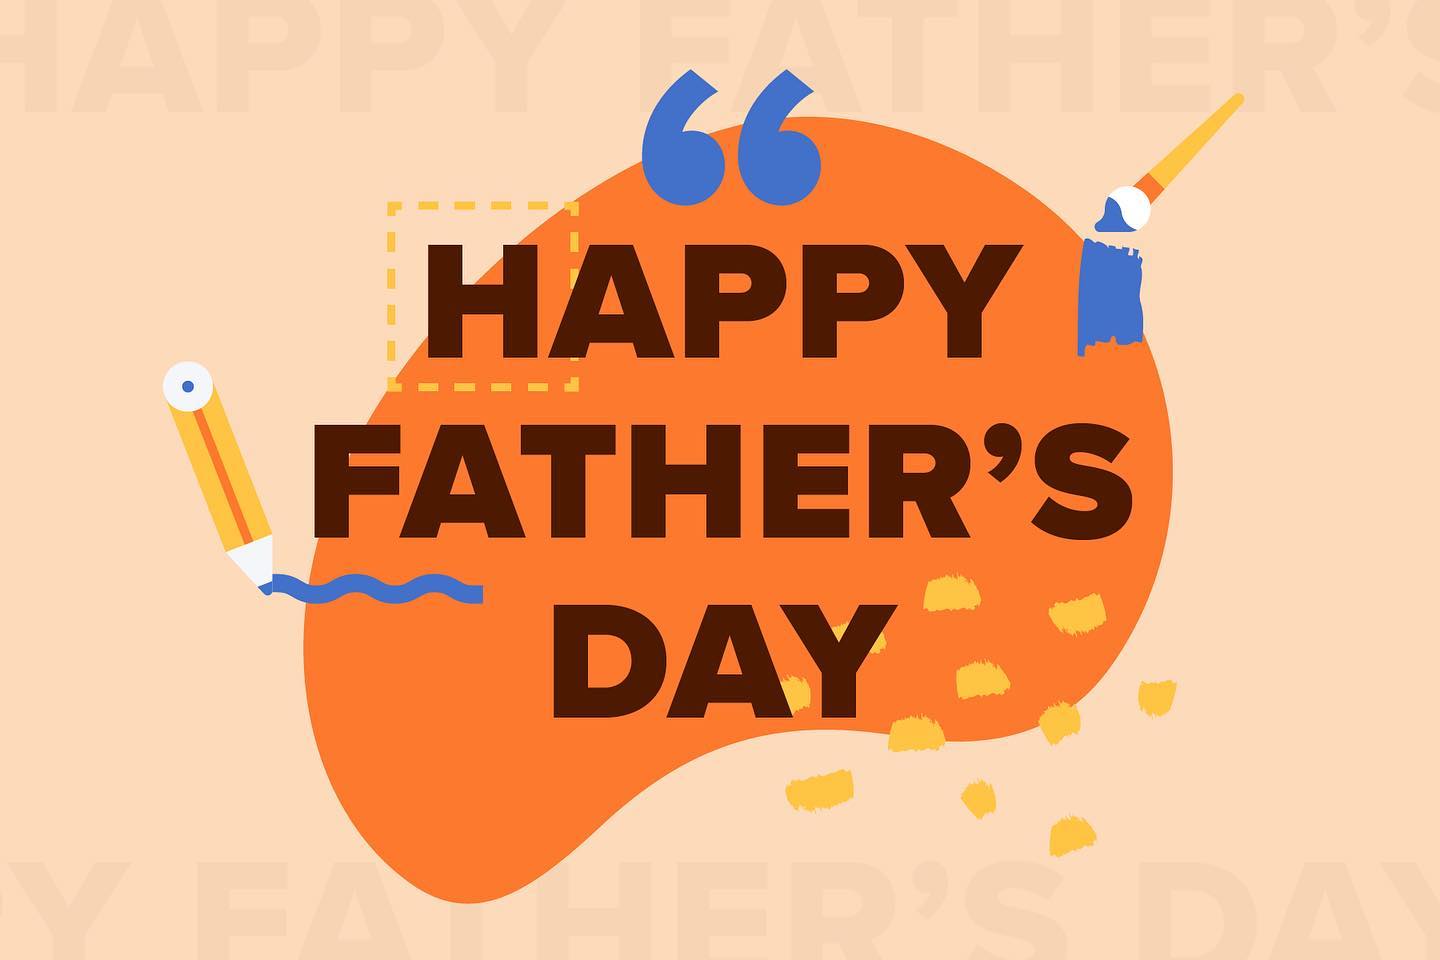 Happy Father’s Day! 

.

.

.

.#happyfathersday #fathersday #oakbay #oakbaylocal #victoriabc #victoria #dentist #dental #yyj